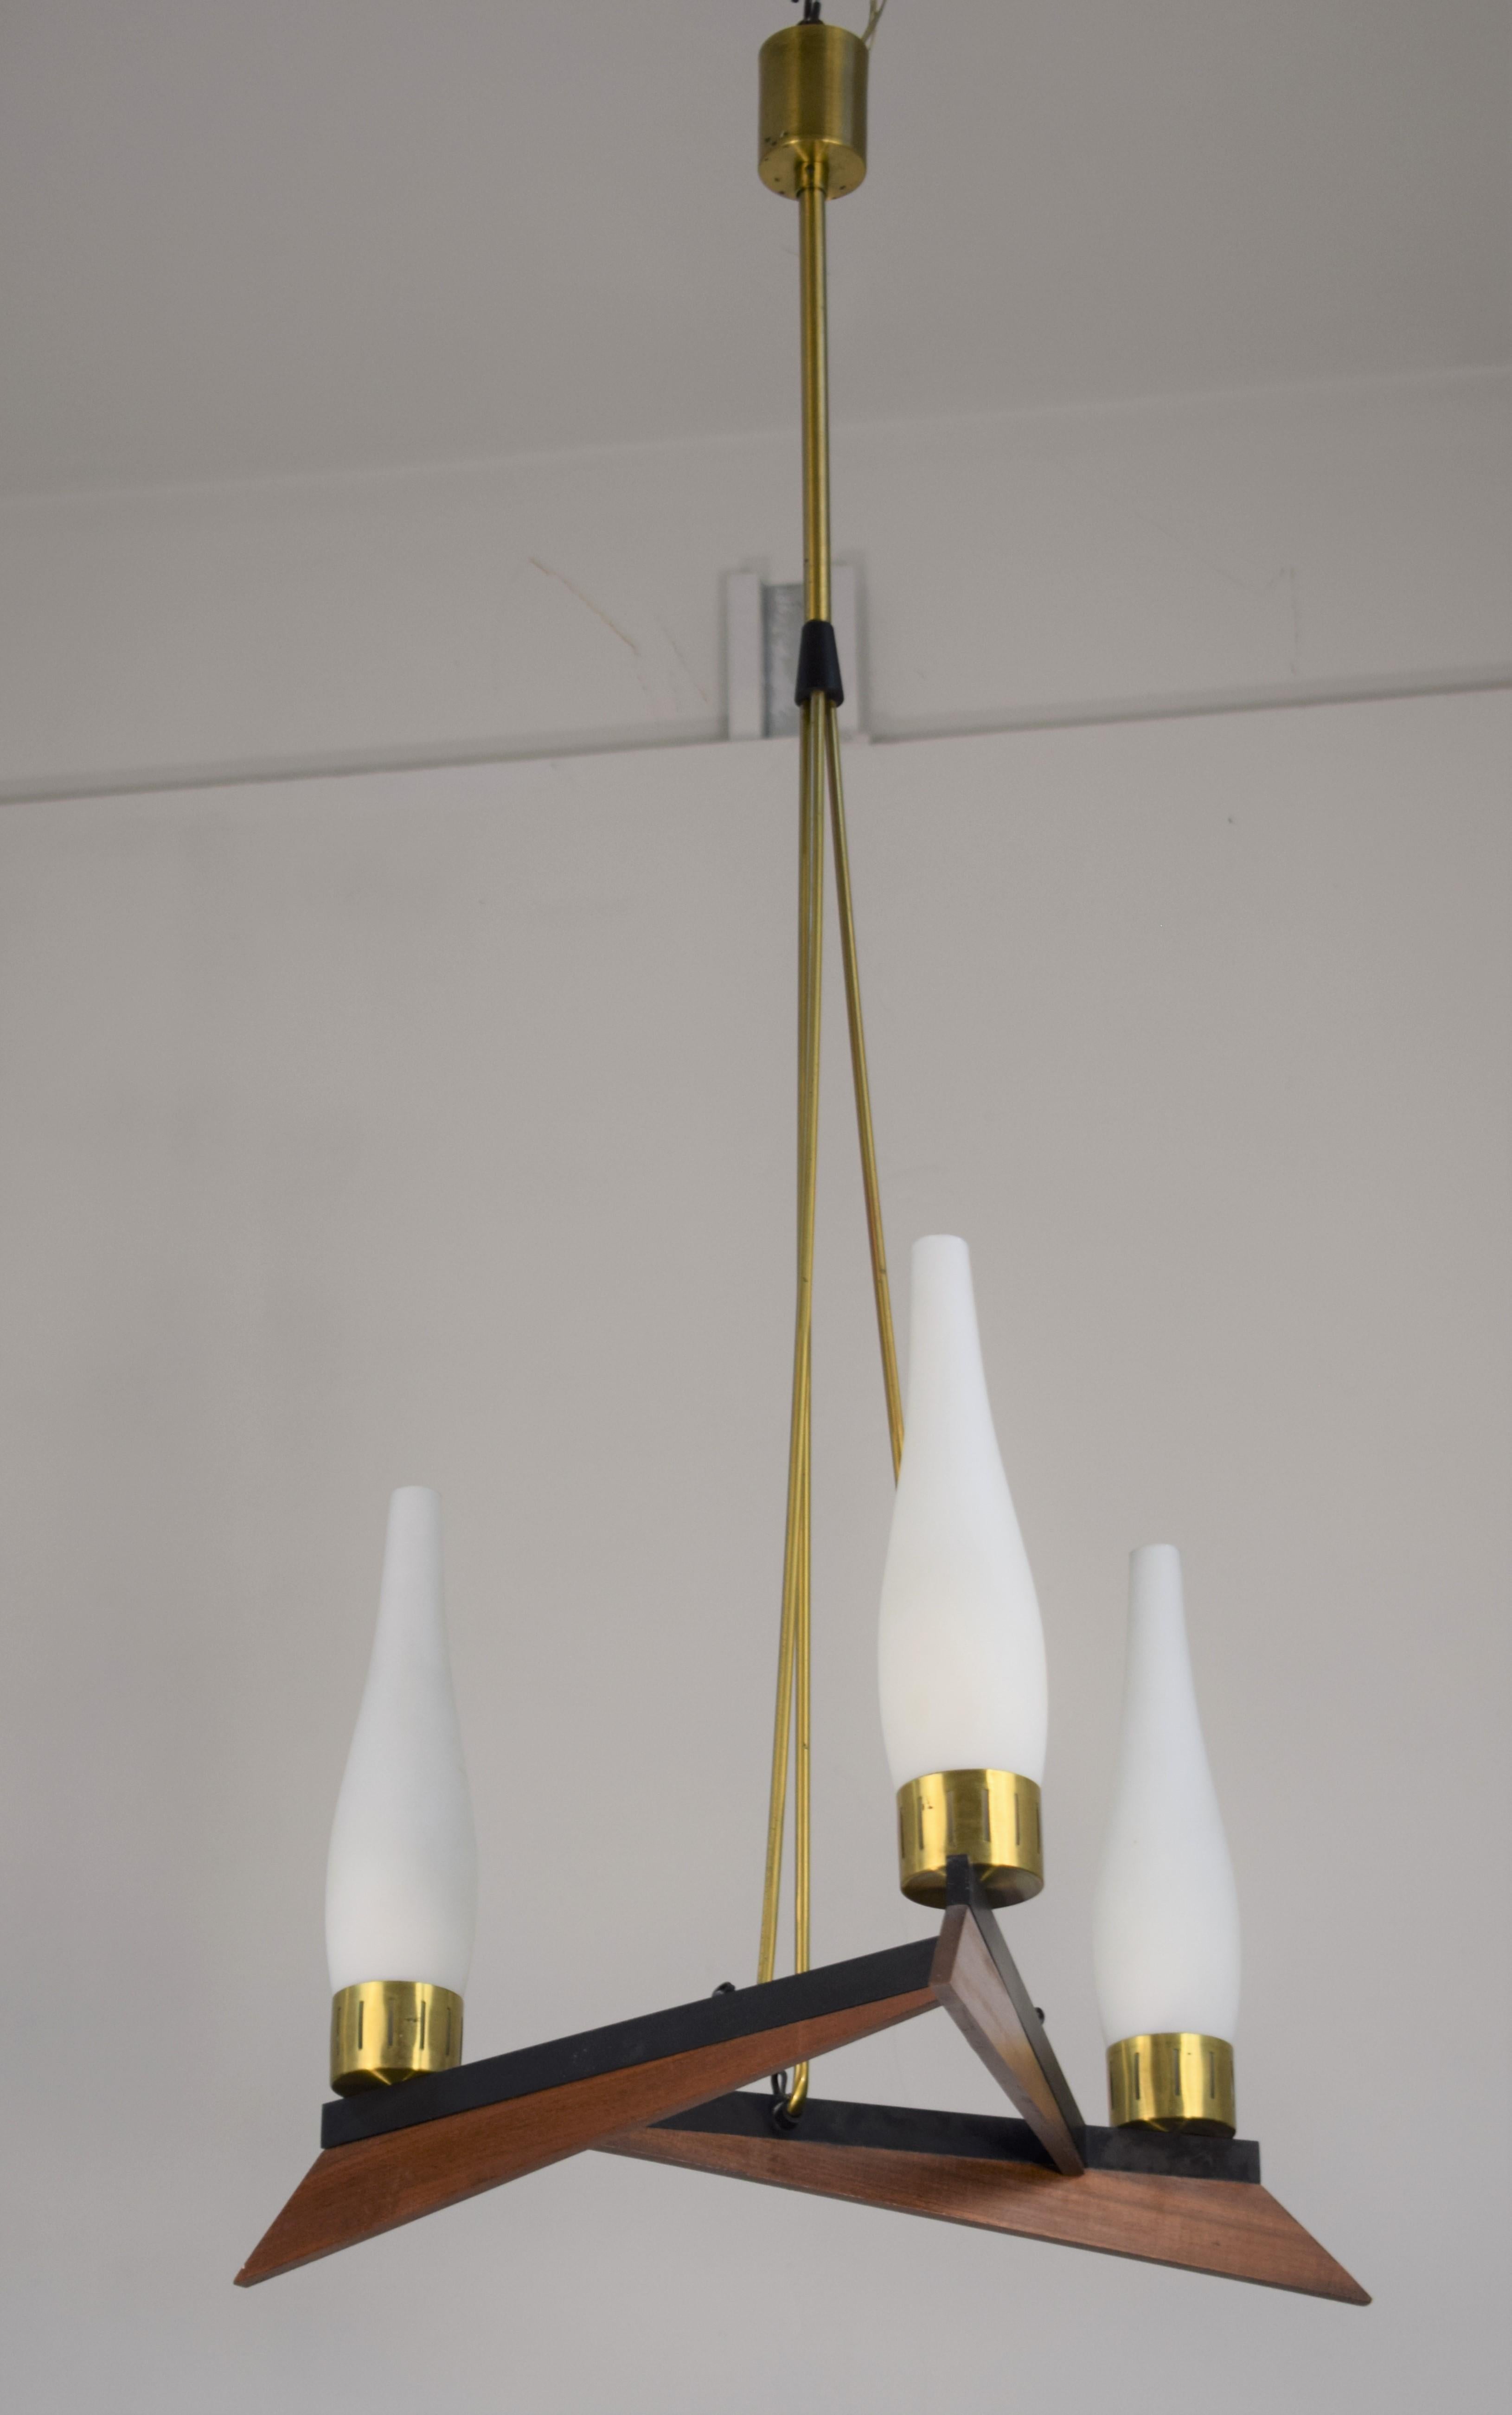 Italian chandelier, brass, opaline glass, wood and metal, 1960s.

Dimensions: H= 100 cm; D= 45 cm.